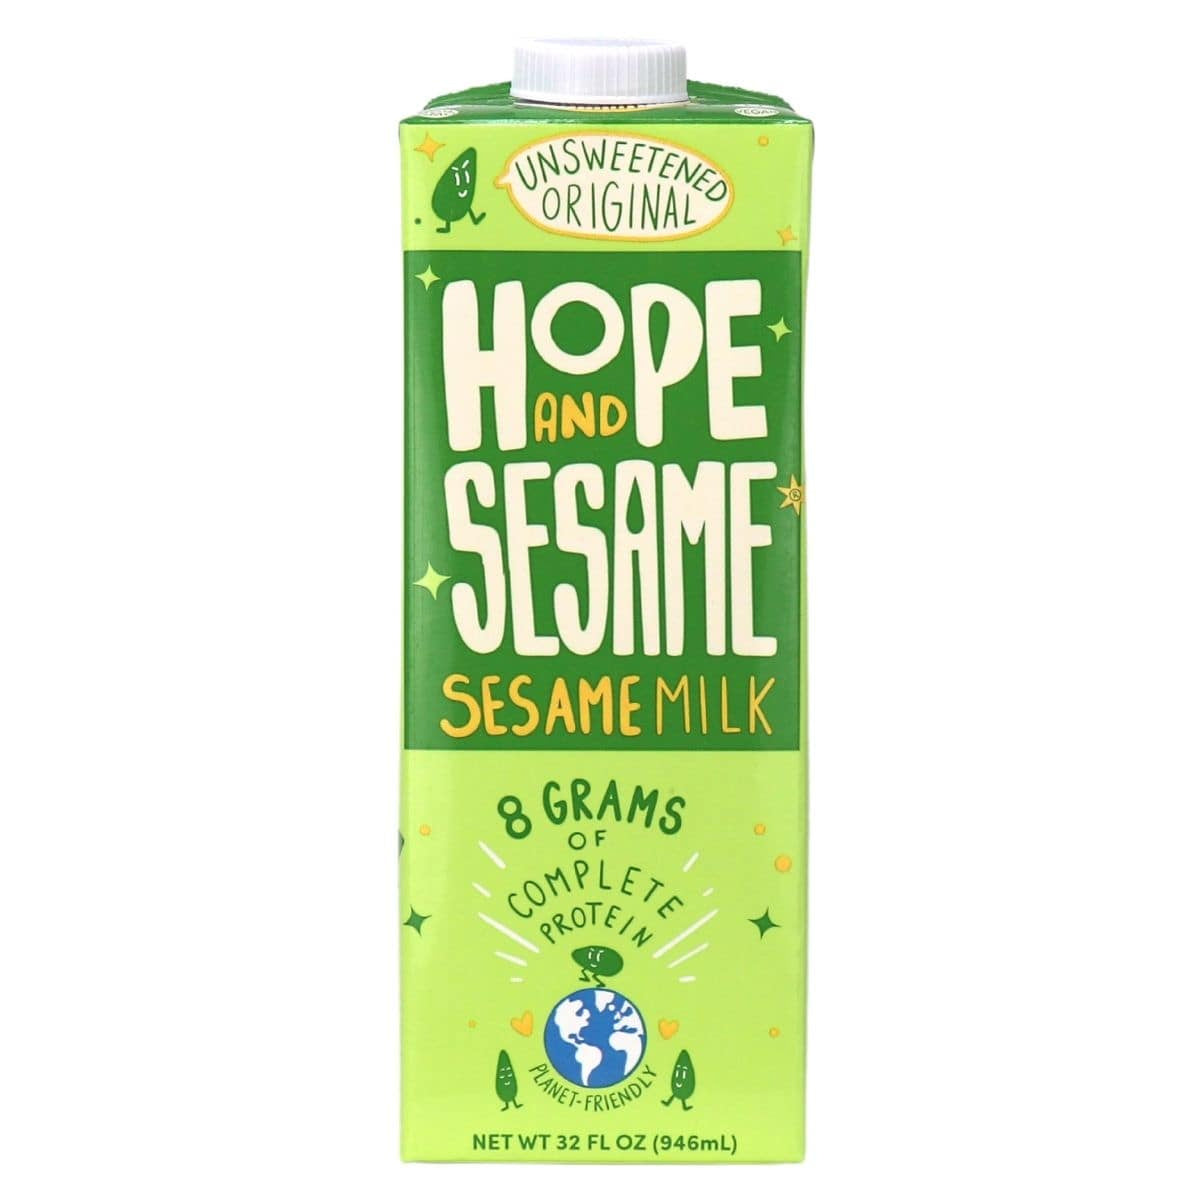 ✅ Hope And Sesame Gluten-Free Sesame Milk Unsweetened Original, 946ml